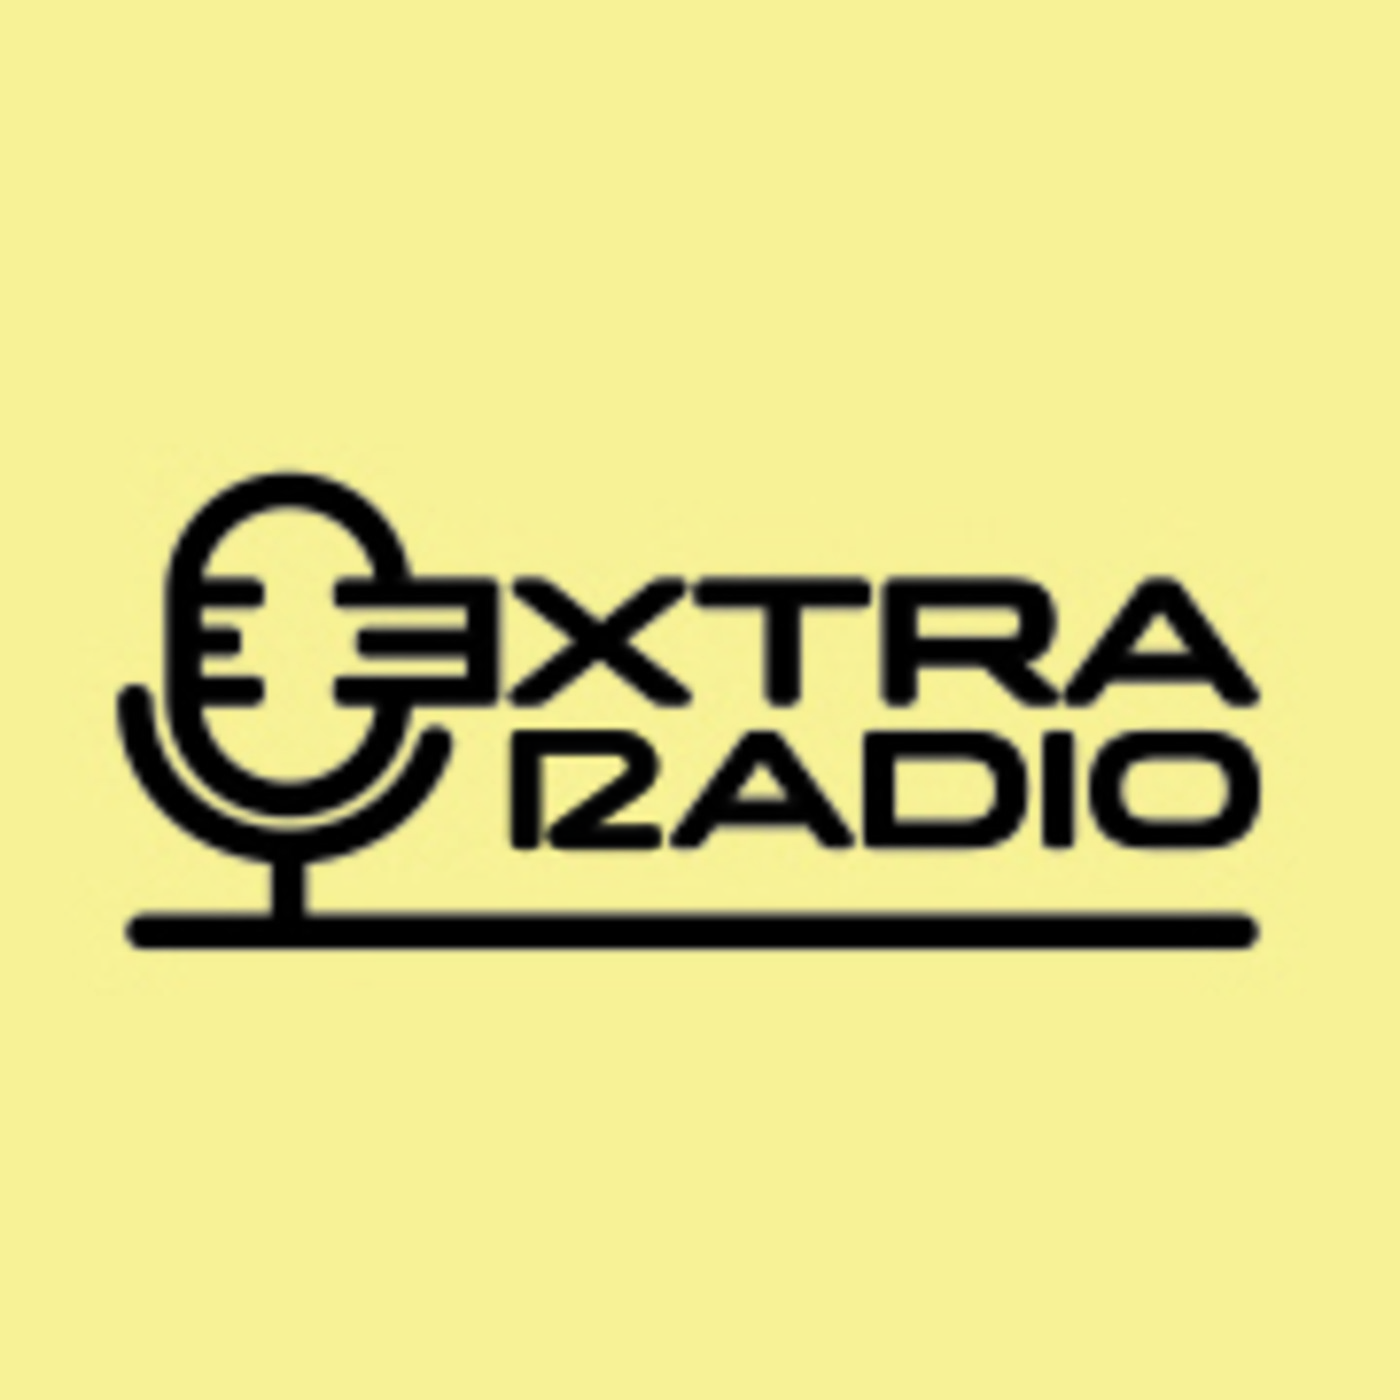 Extra Radio